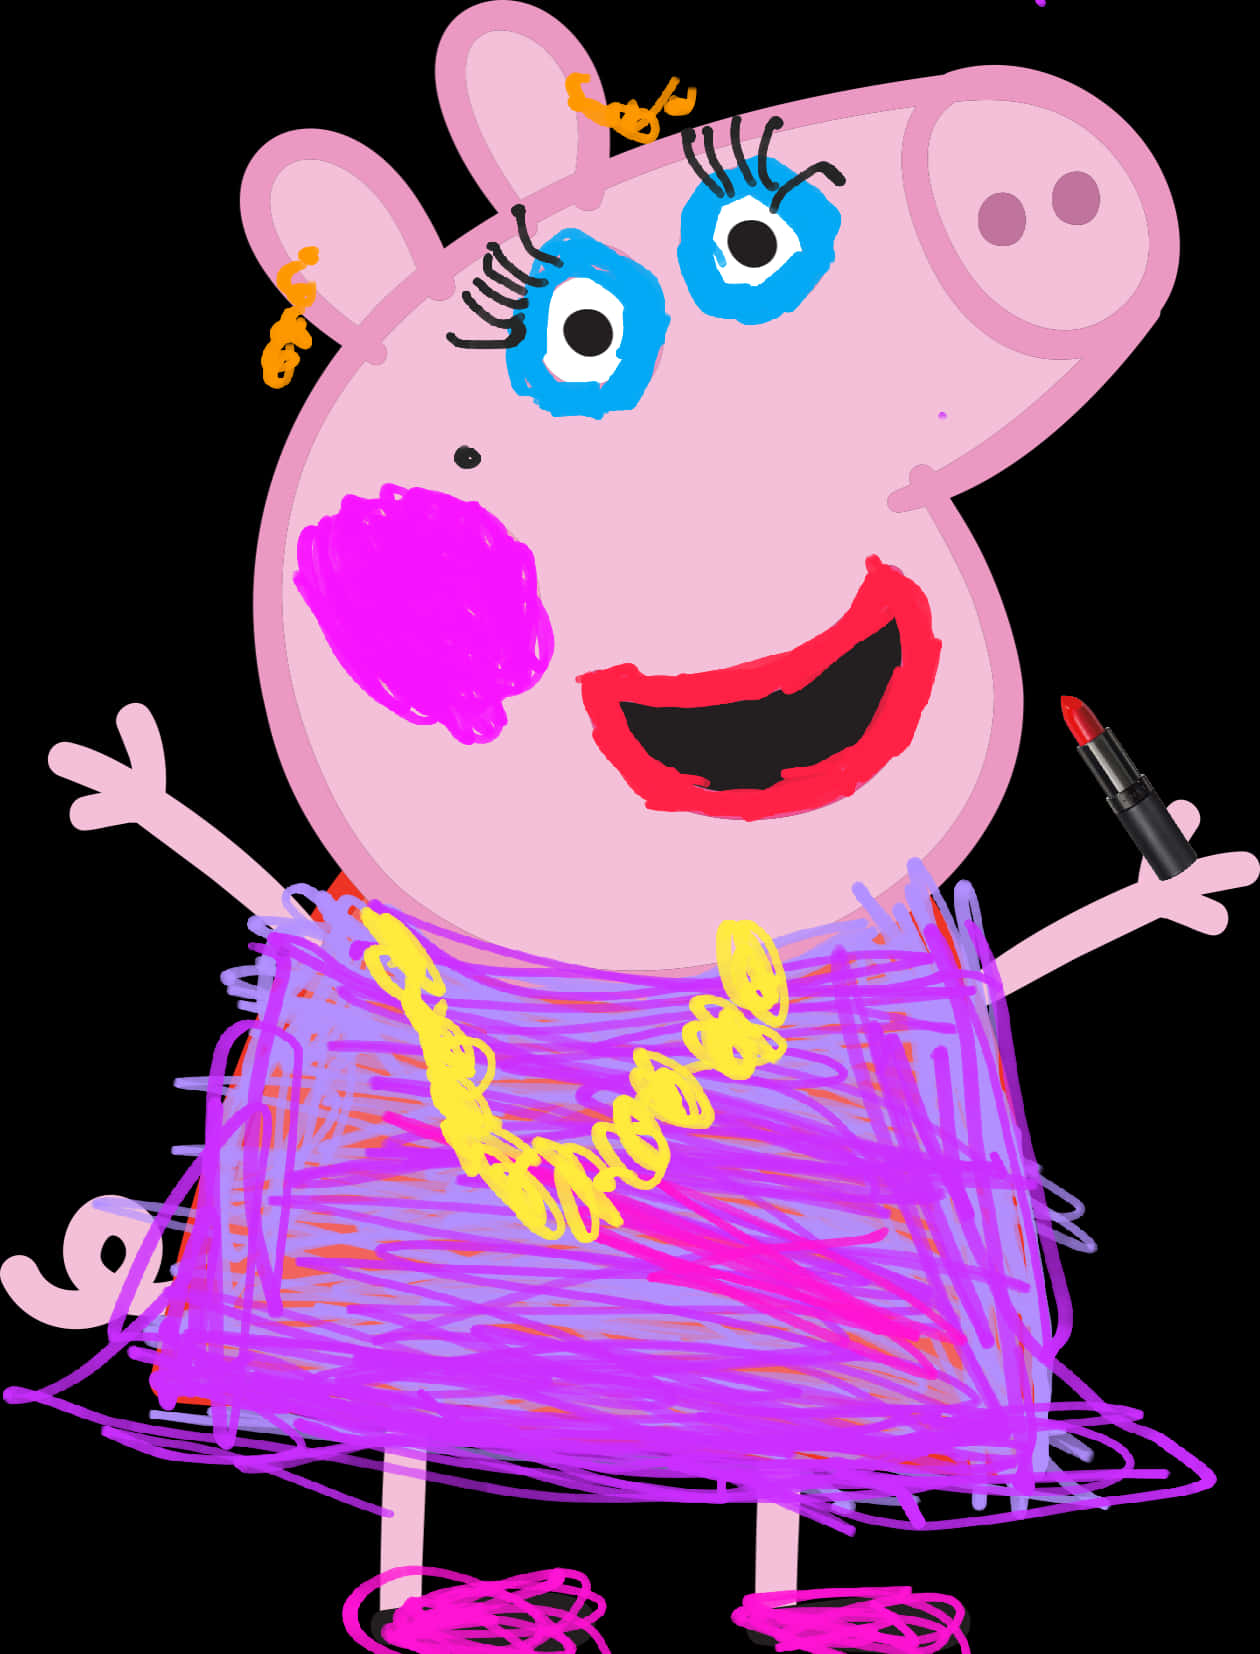 A Cartoon Pig With Lipstick